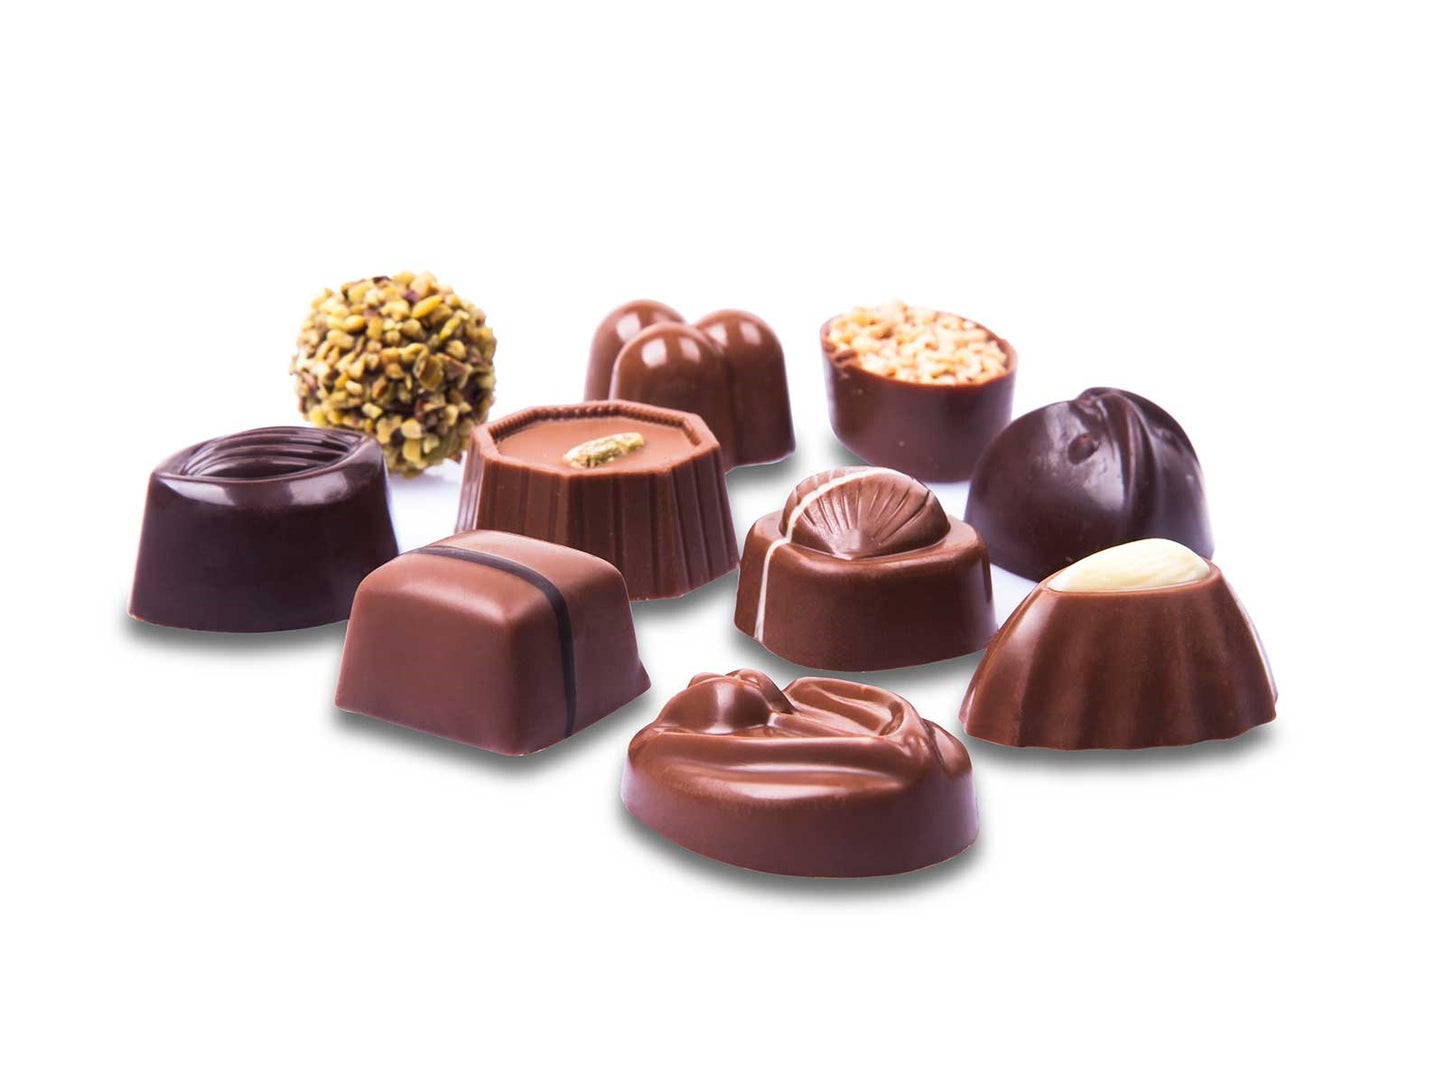 İndigo Lale Spesiyal Çikolata Kurumsal Bayram Seti 37500 Gr (50 Kutu X 750 Gr) Net 13000 Gr